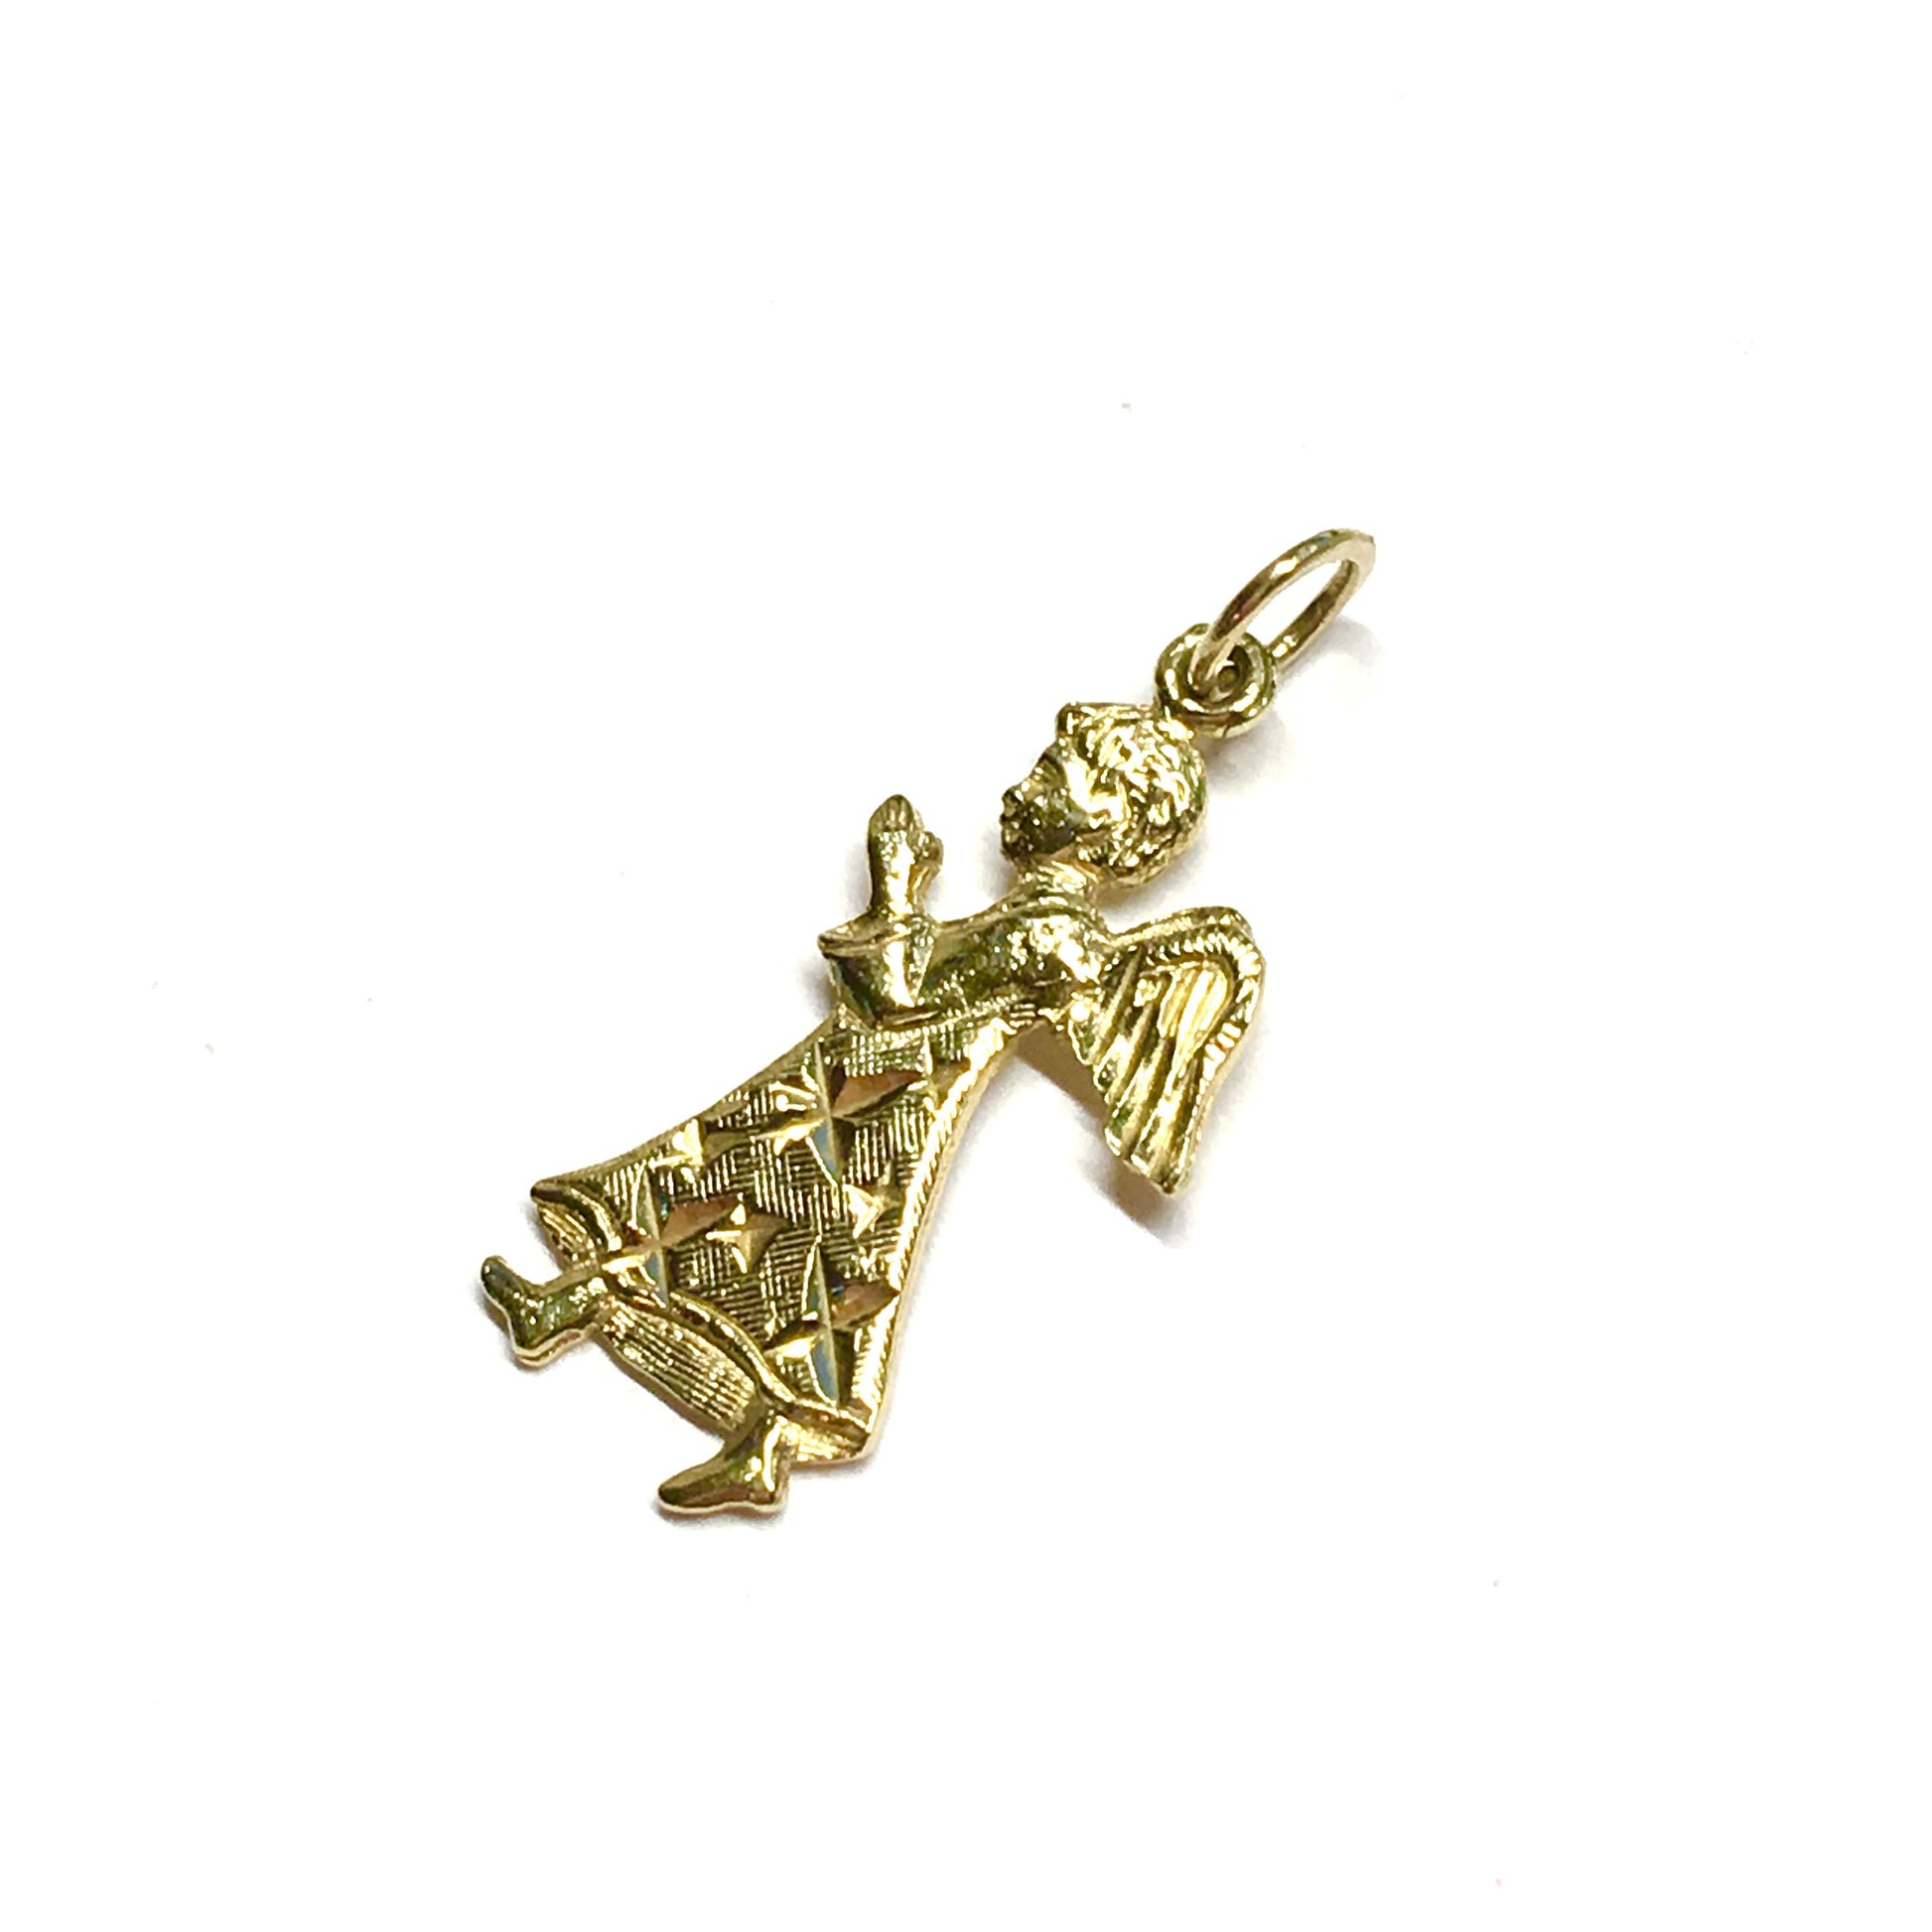 Charm - 14k Gold Angel Pendant - Shimmering Diamond Cut Boy Charm - Discount Estate Jewelry